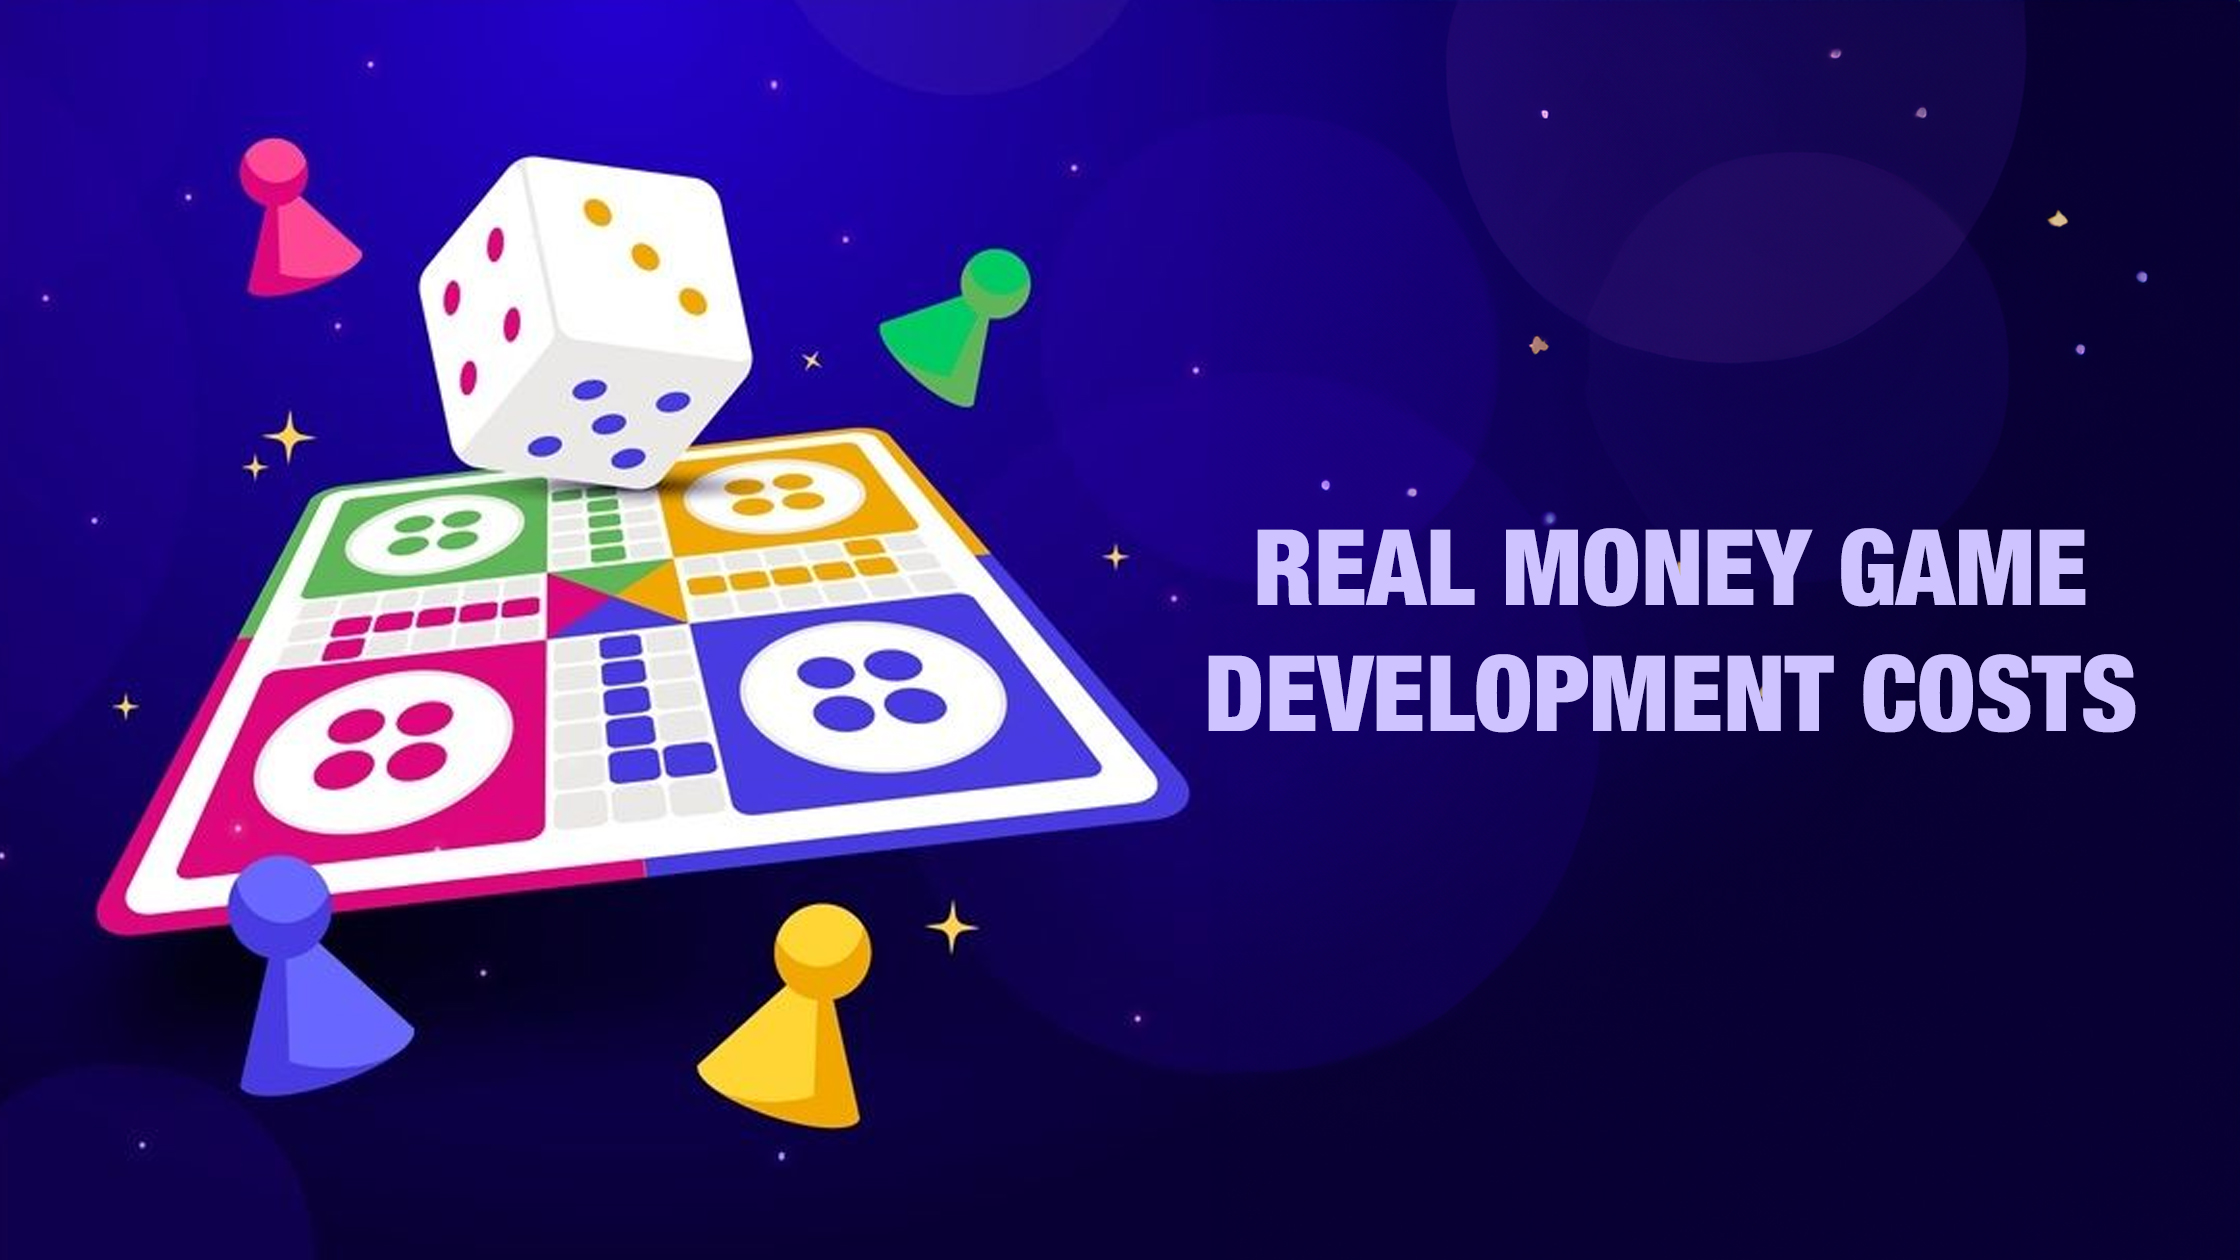 Real Money Game Development